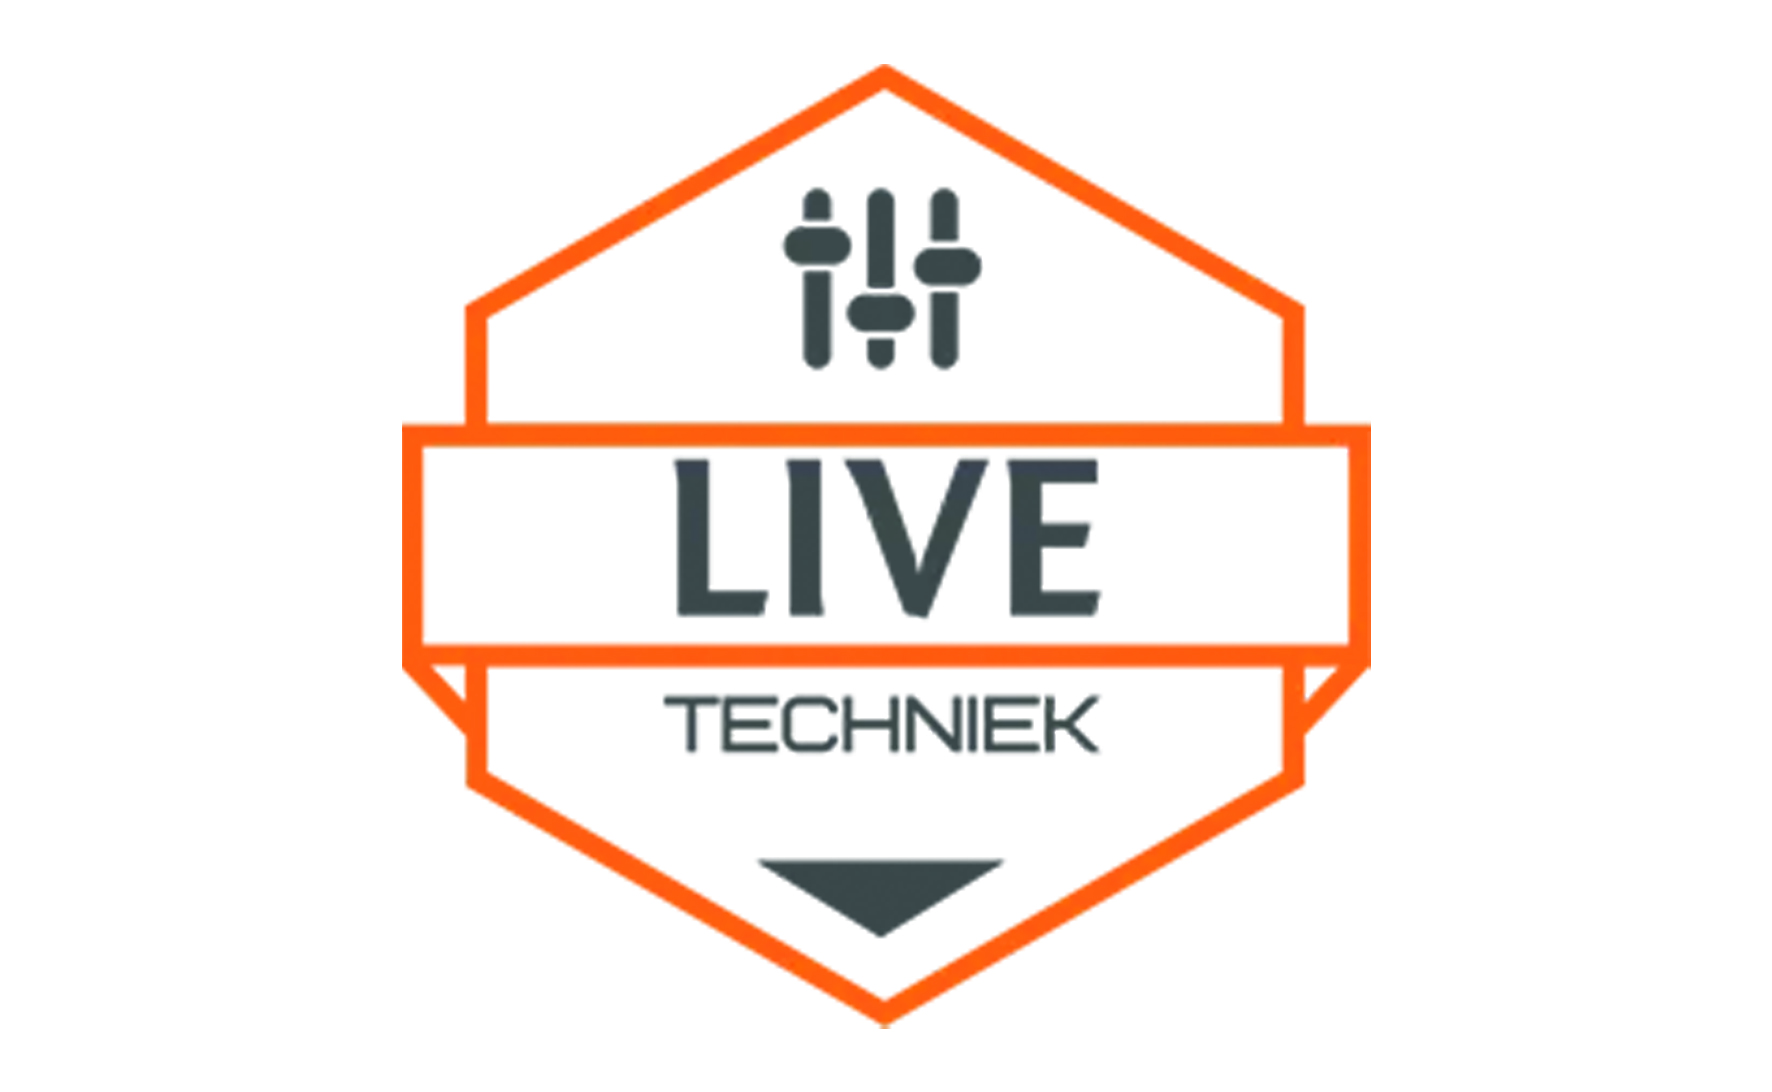 Live techniek logo